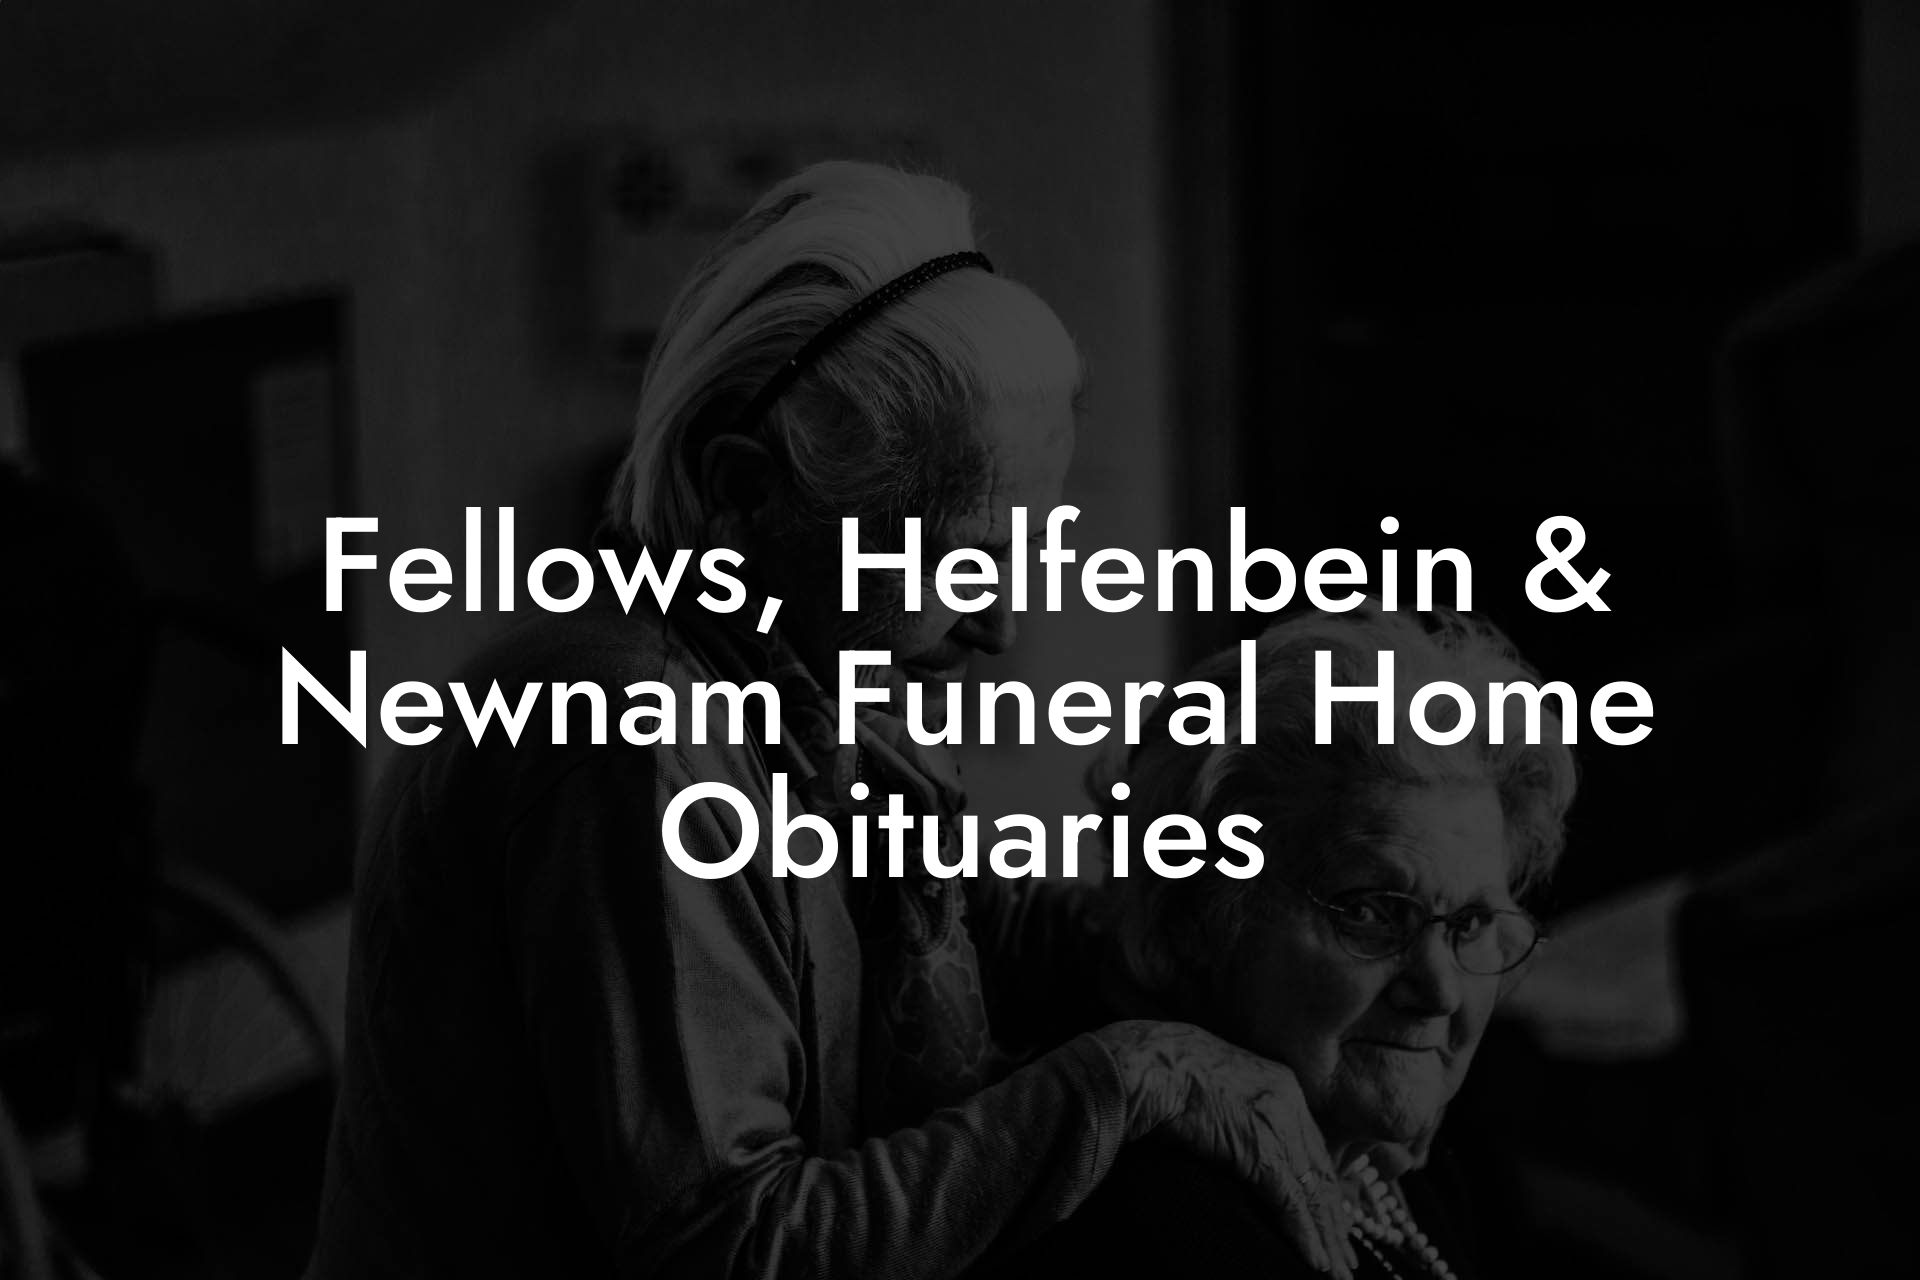 Fellows, Helfenbein & Newnam Funeral Home Obituaries